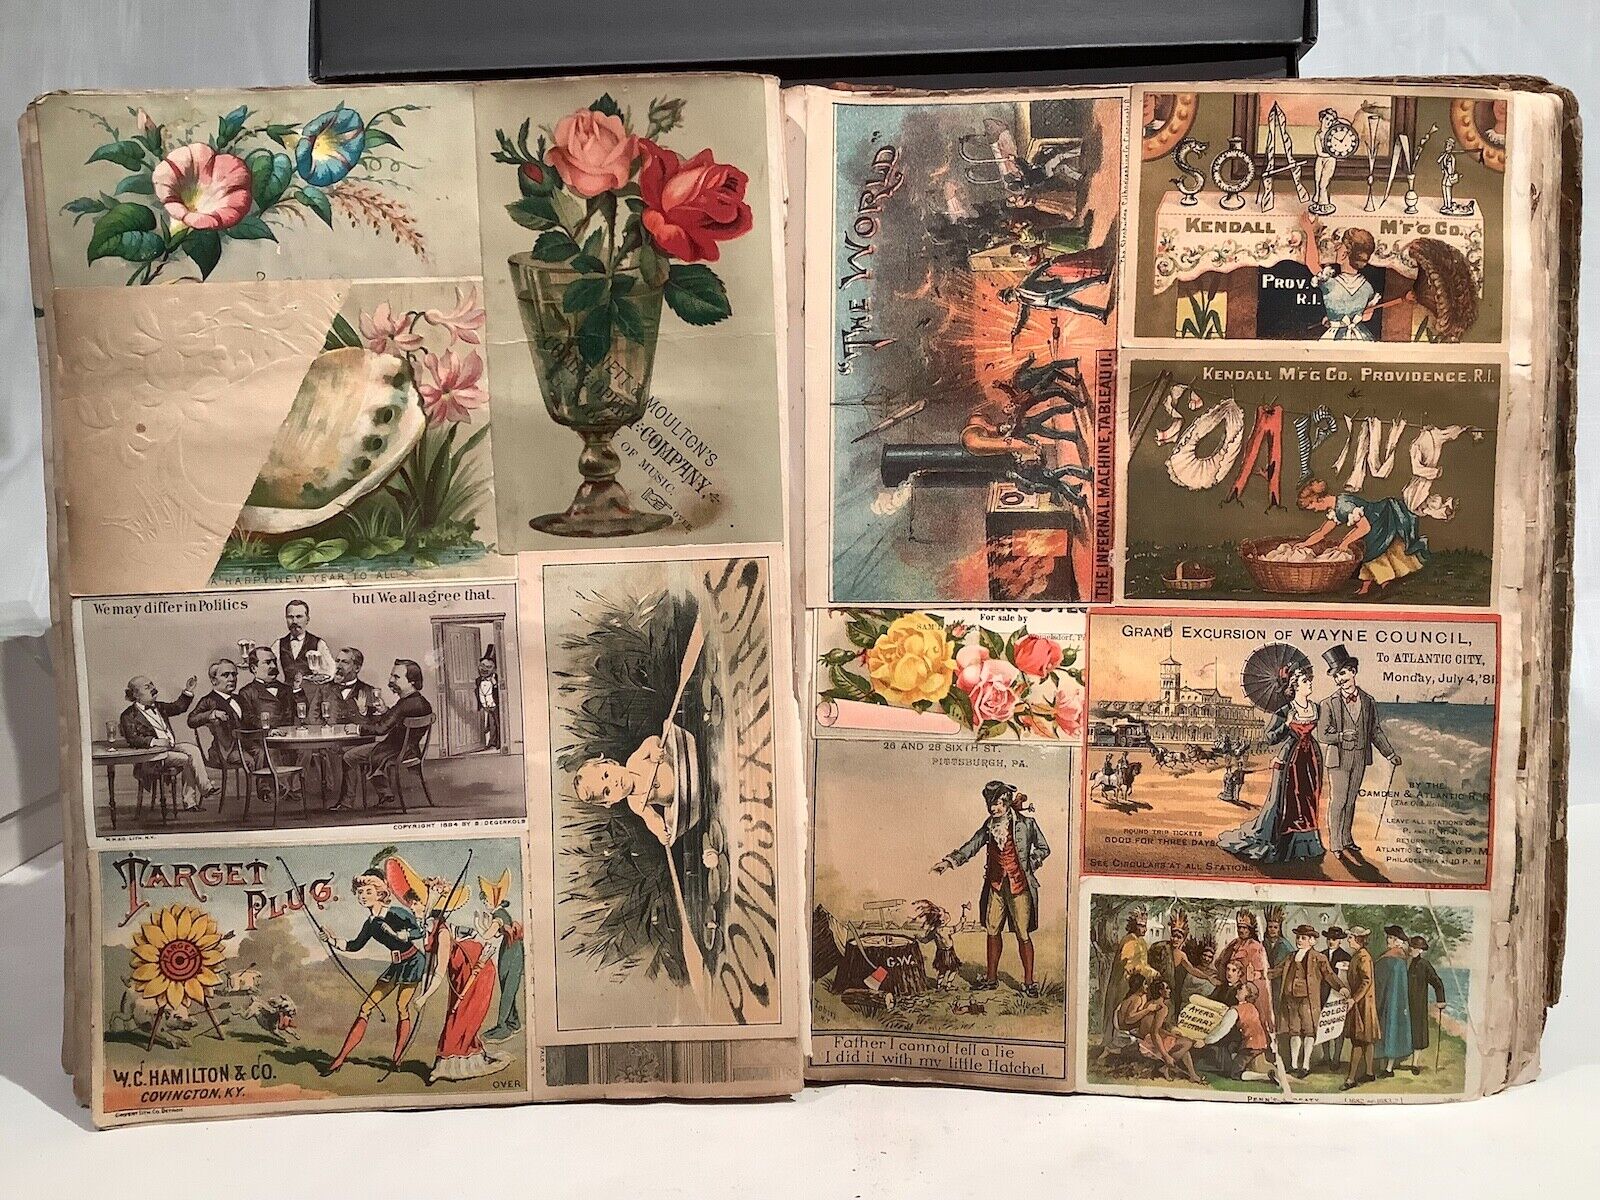 1880's-1890's VICTORIAN TRADE CARD ALBUM, 315 CARDS, INCLUDING SOME RARE ONES